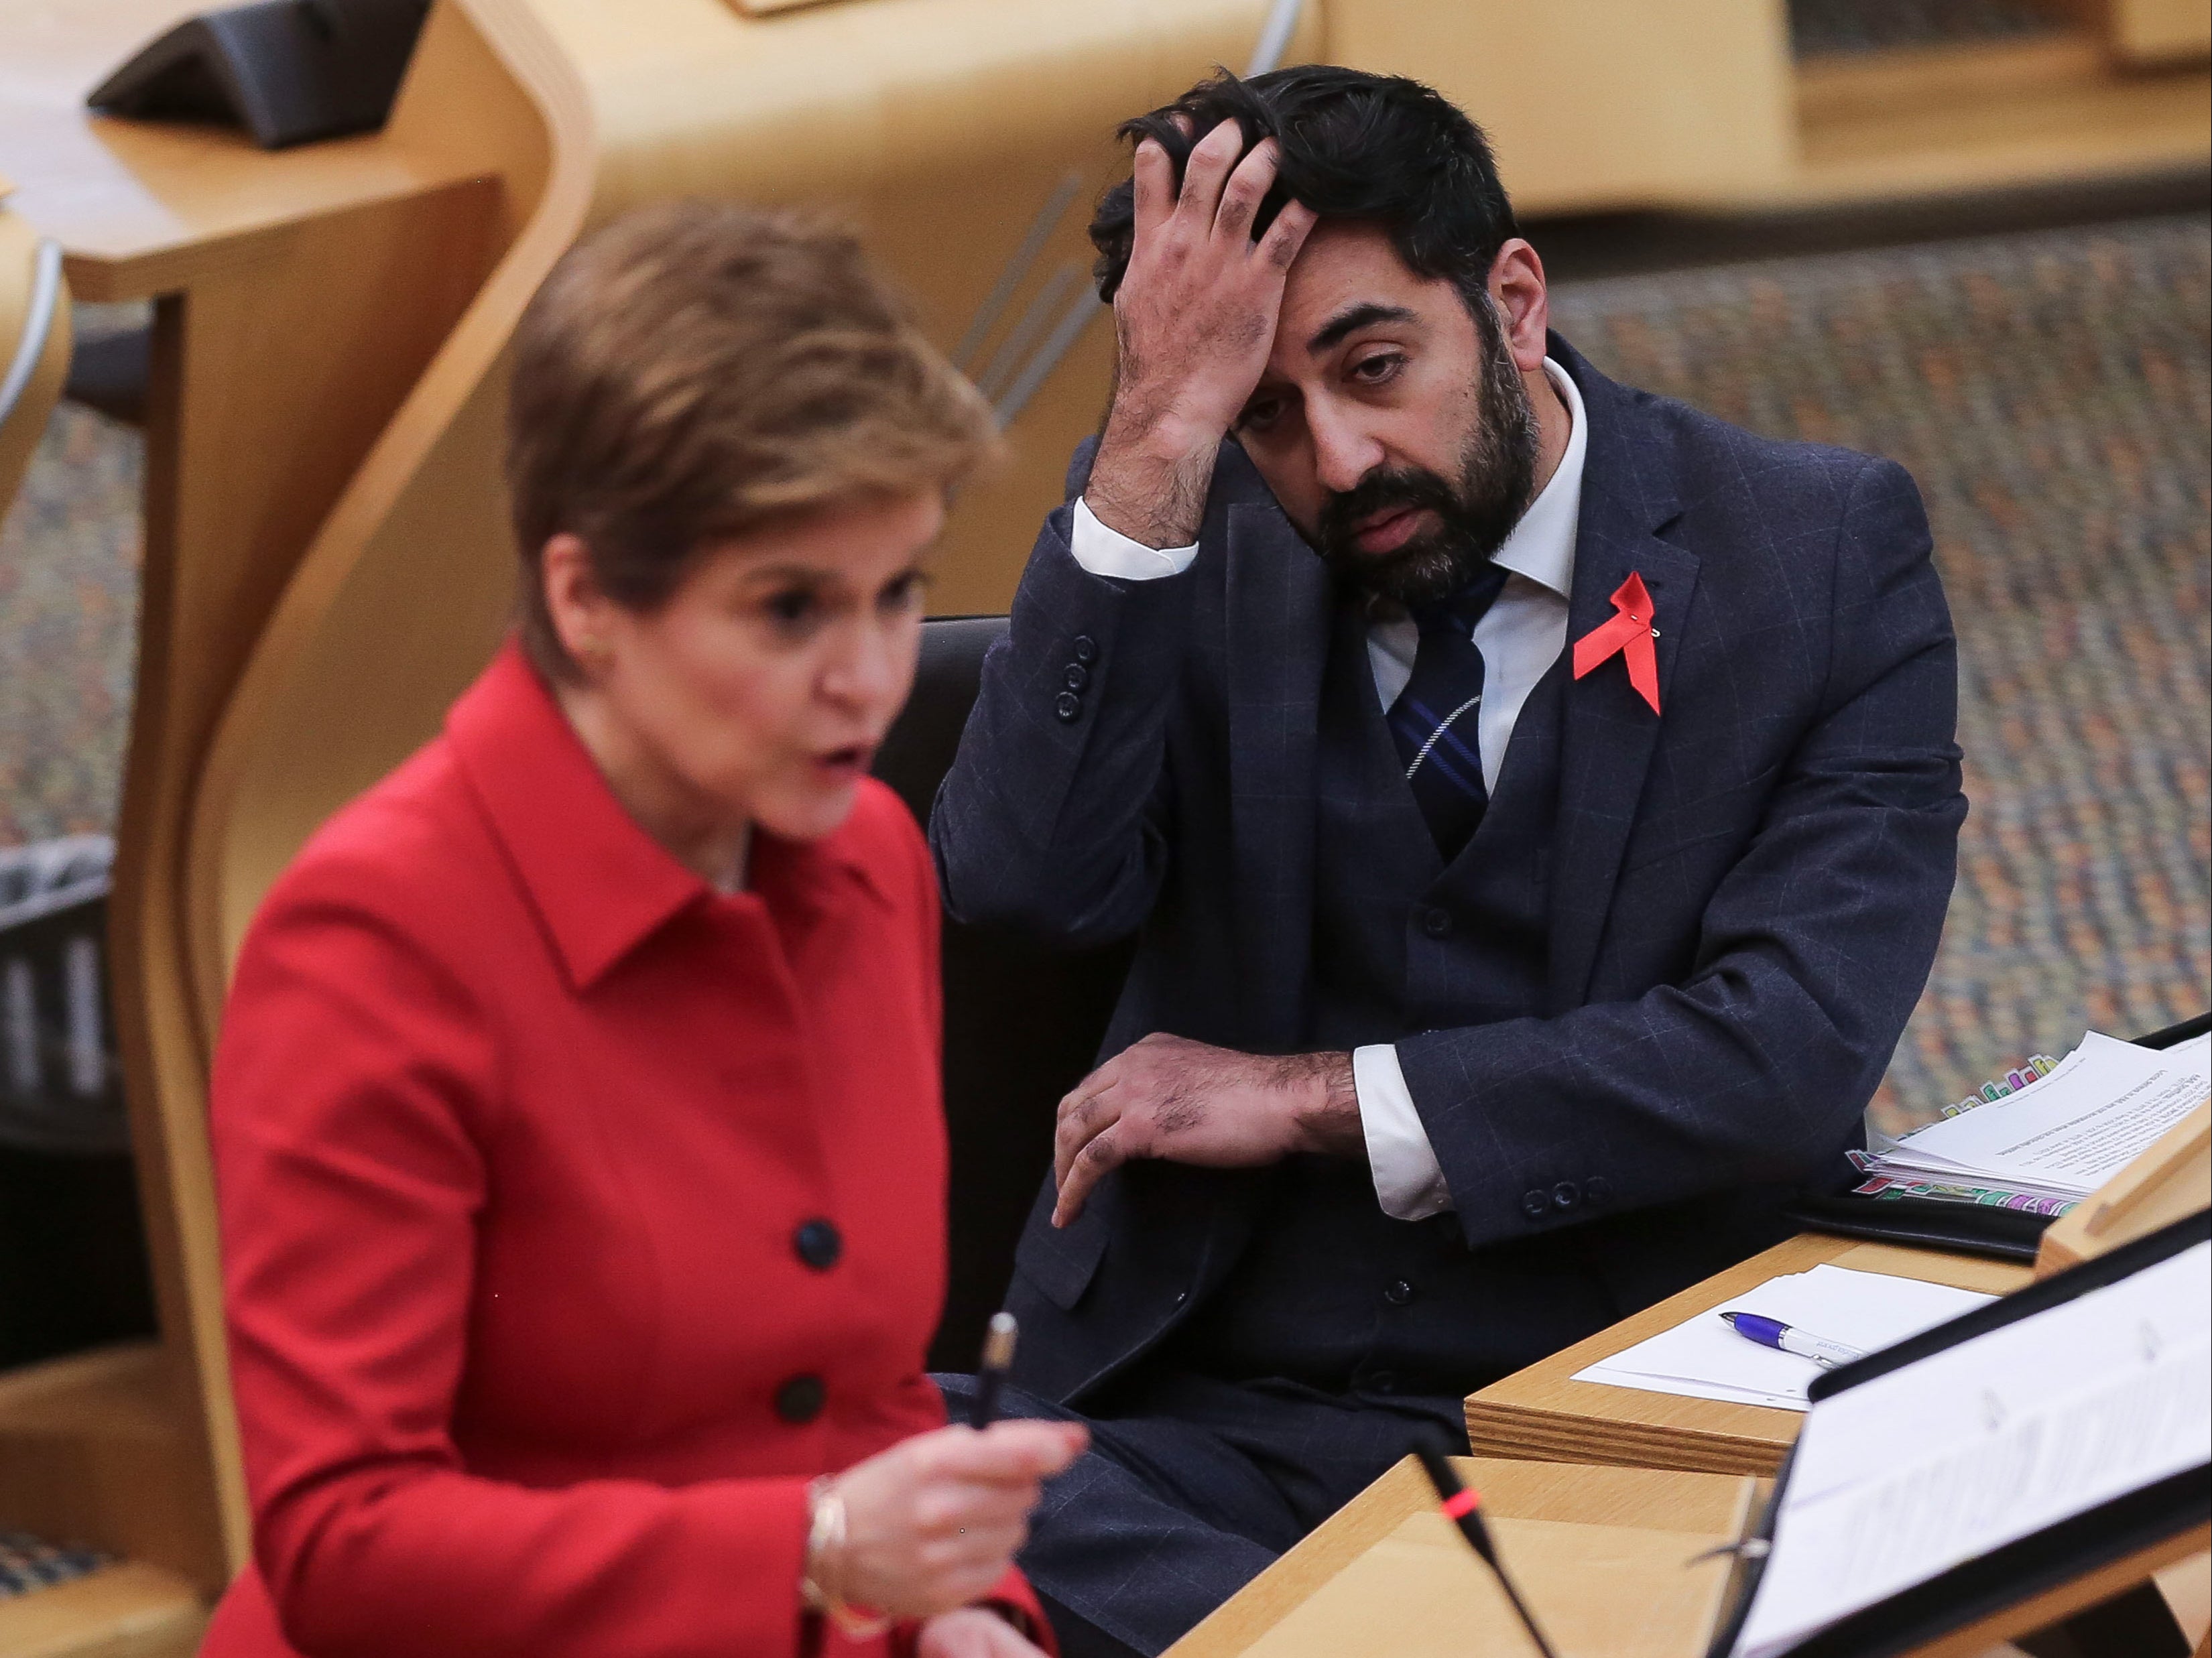 Scotland’s health secretary Humza Yousaf looks on as Scotland’s first minister Nicola Sturgeon speaks in Holyrood